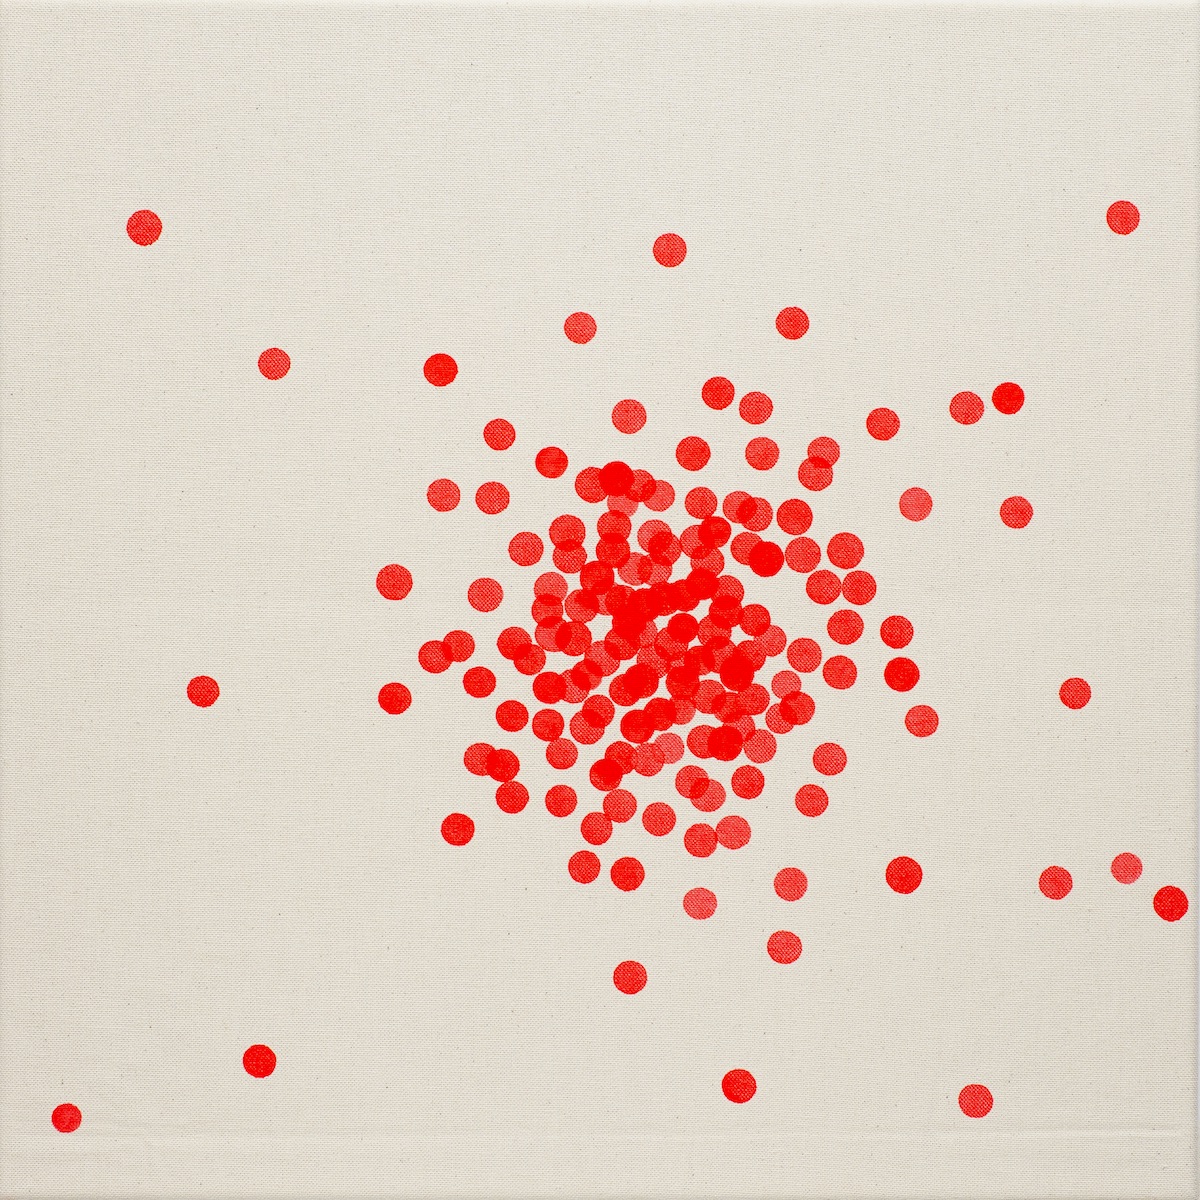 simone hamann bubbles_sweet strawberry1 2014 50 x 50cm acrylic on cotton foto-siegfried wameser